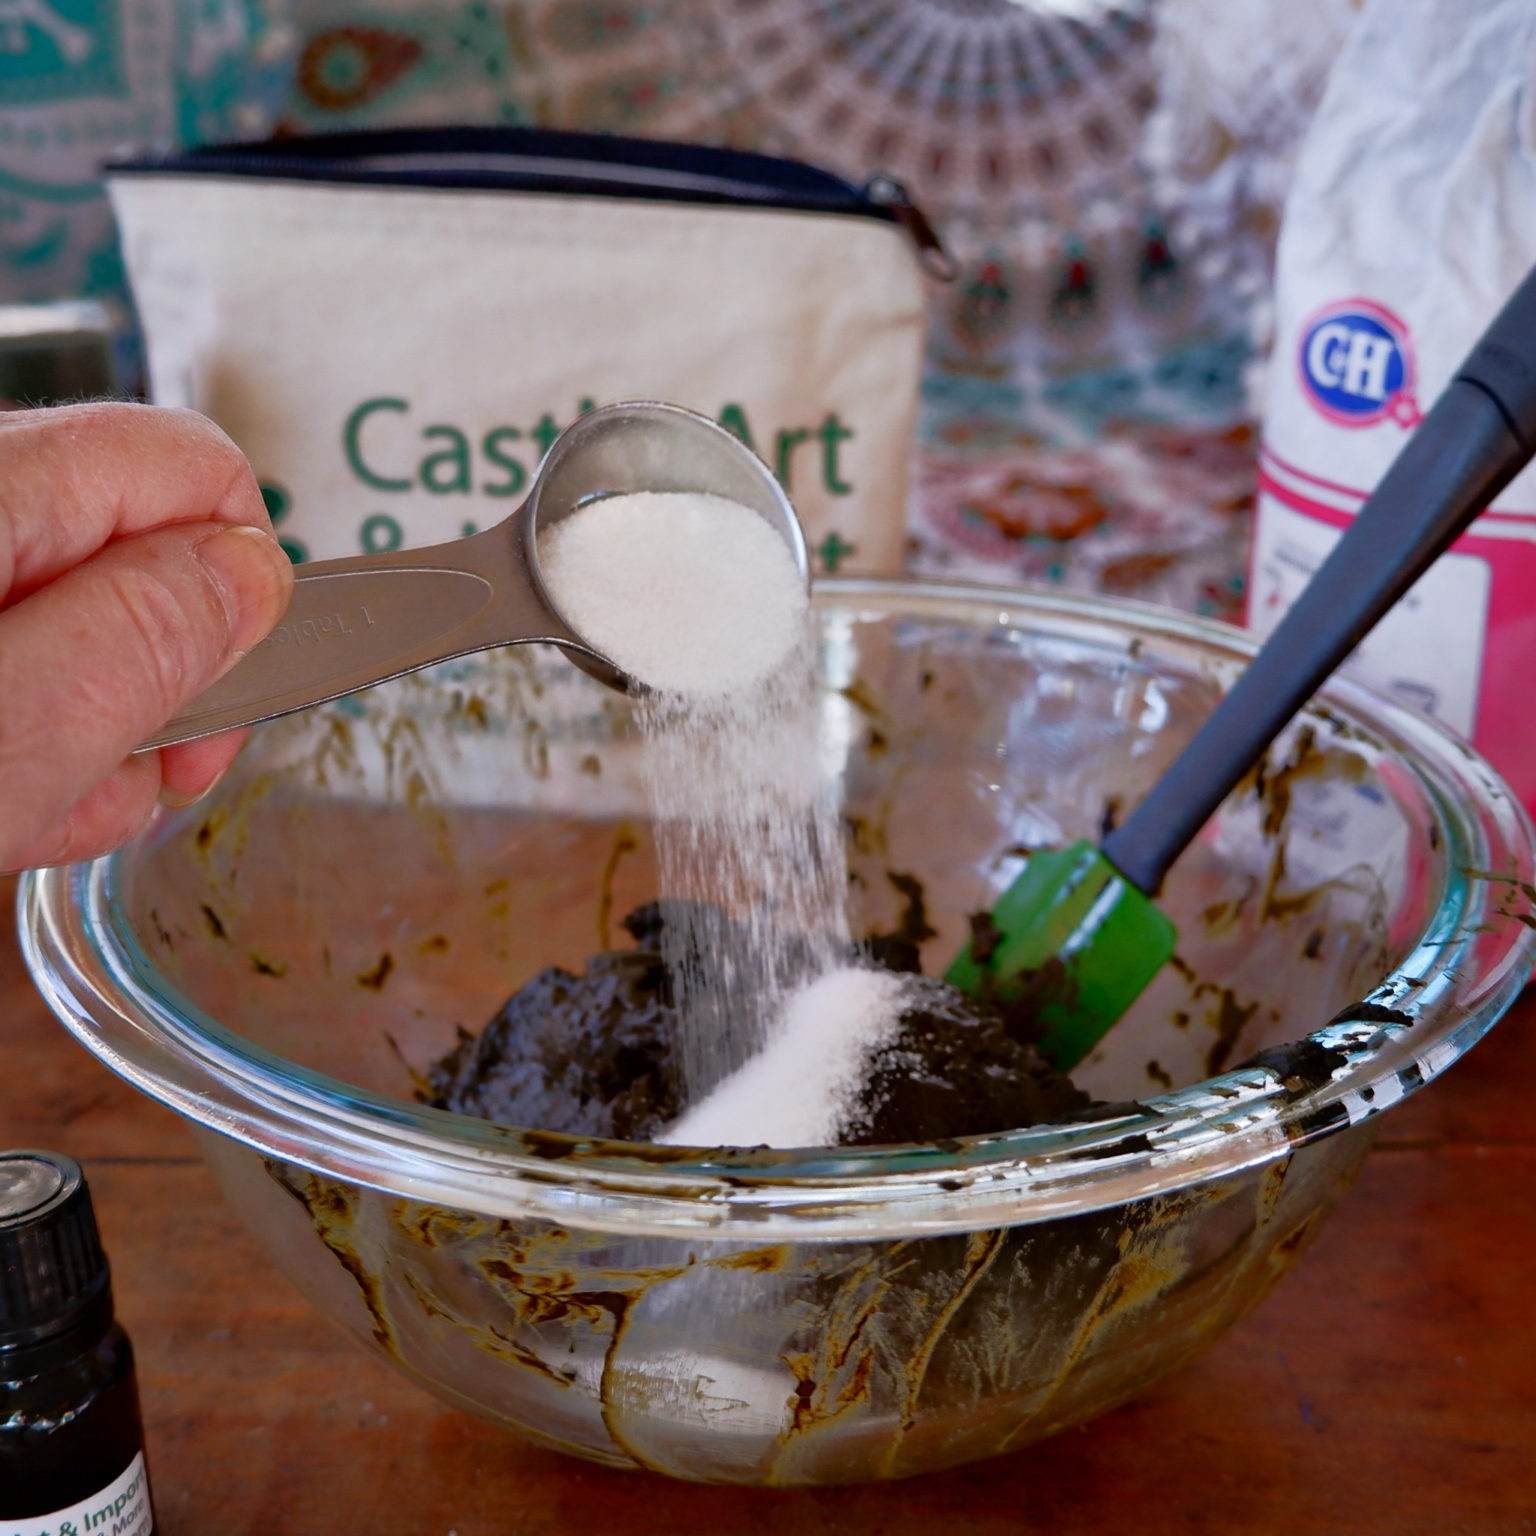 Adding sugar to henna mix